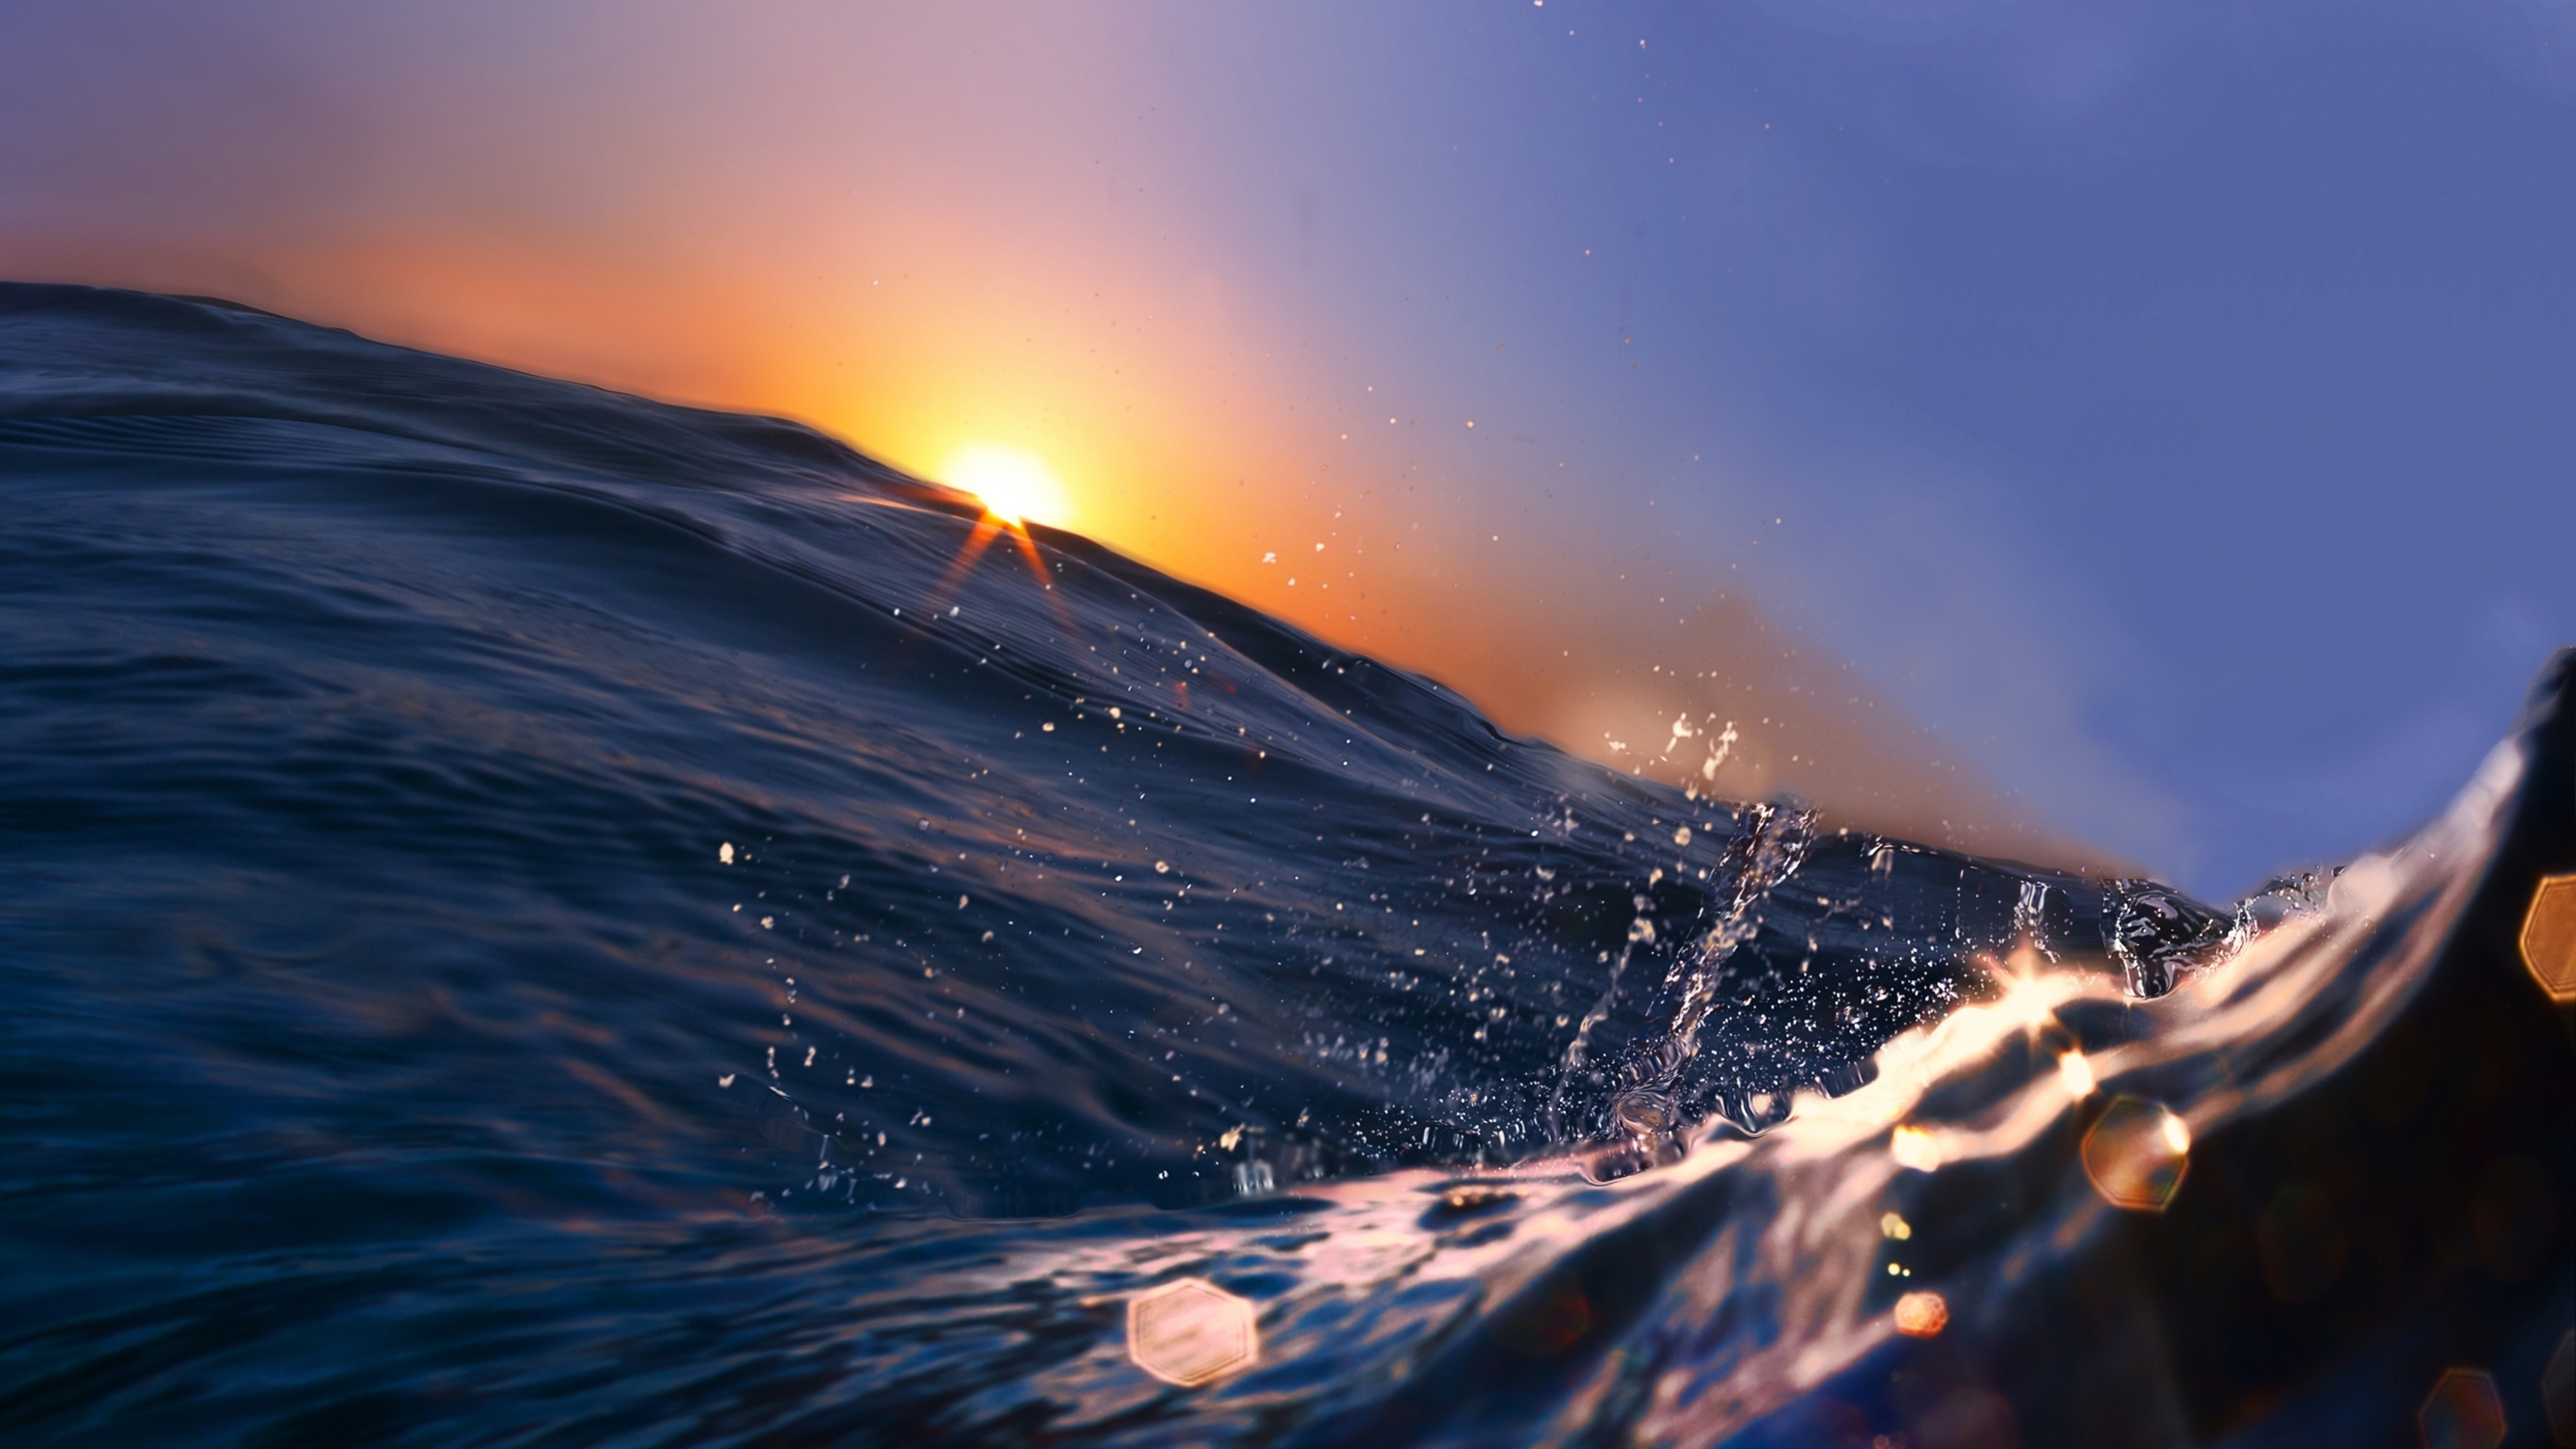 Image: Water, sea, ocean, waves, splashes, drops, sun, sky